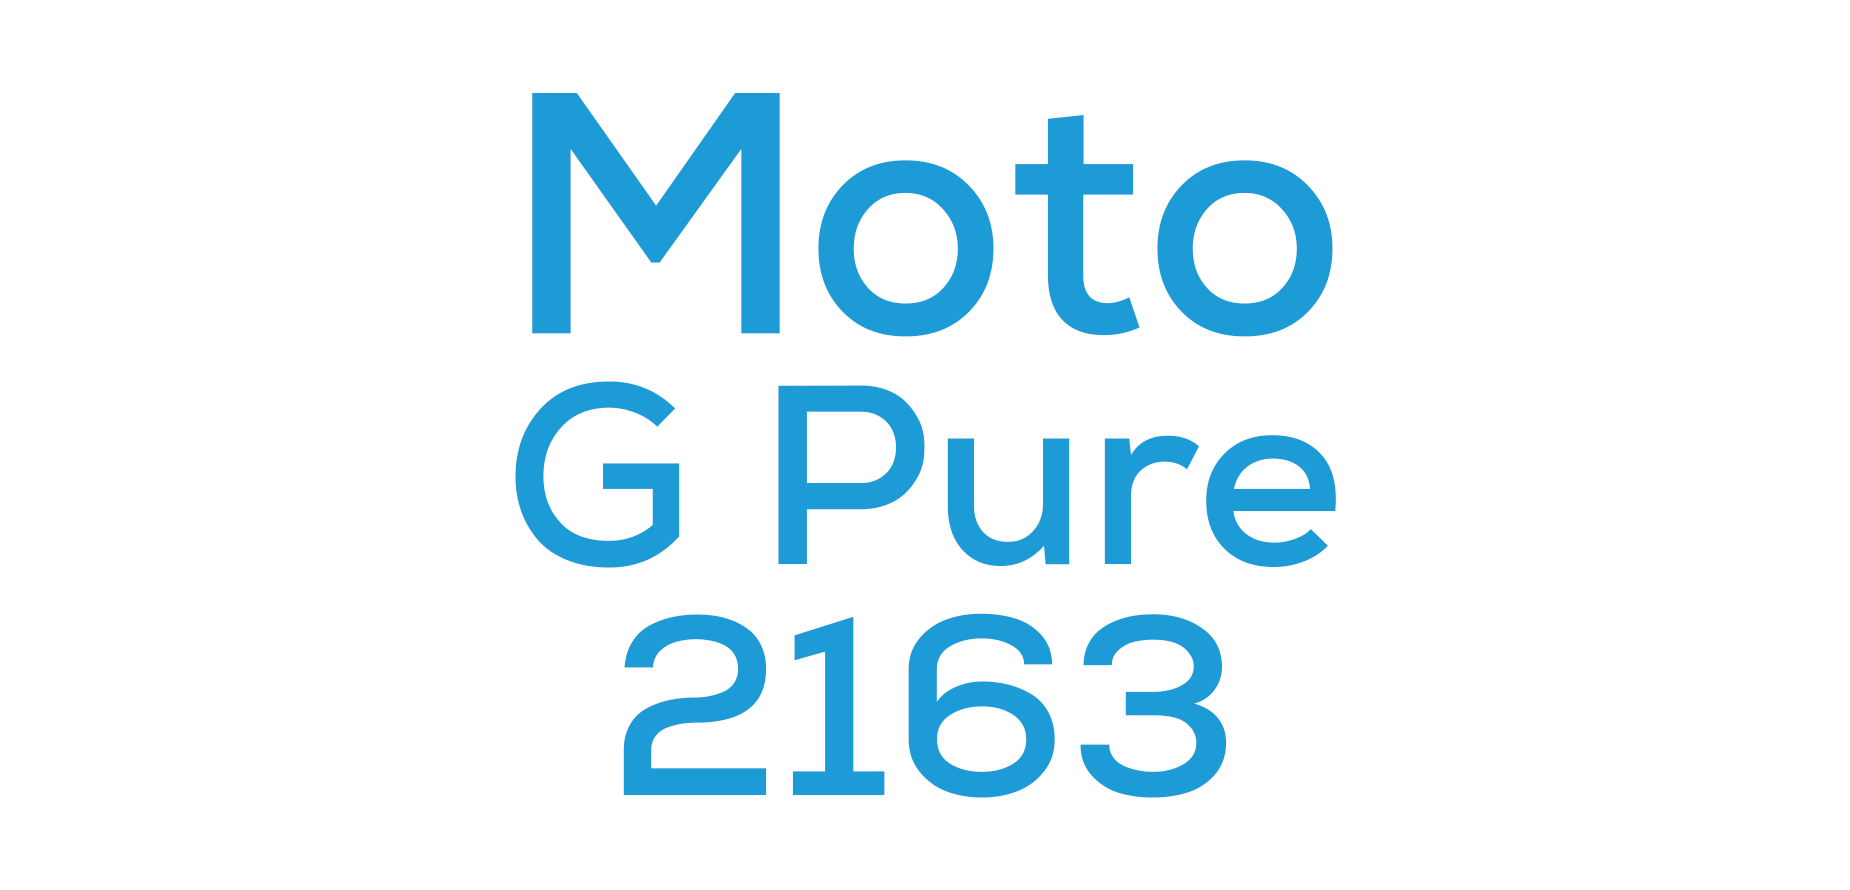 Moto G Pure (2163)